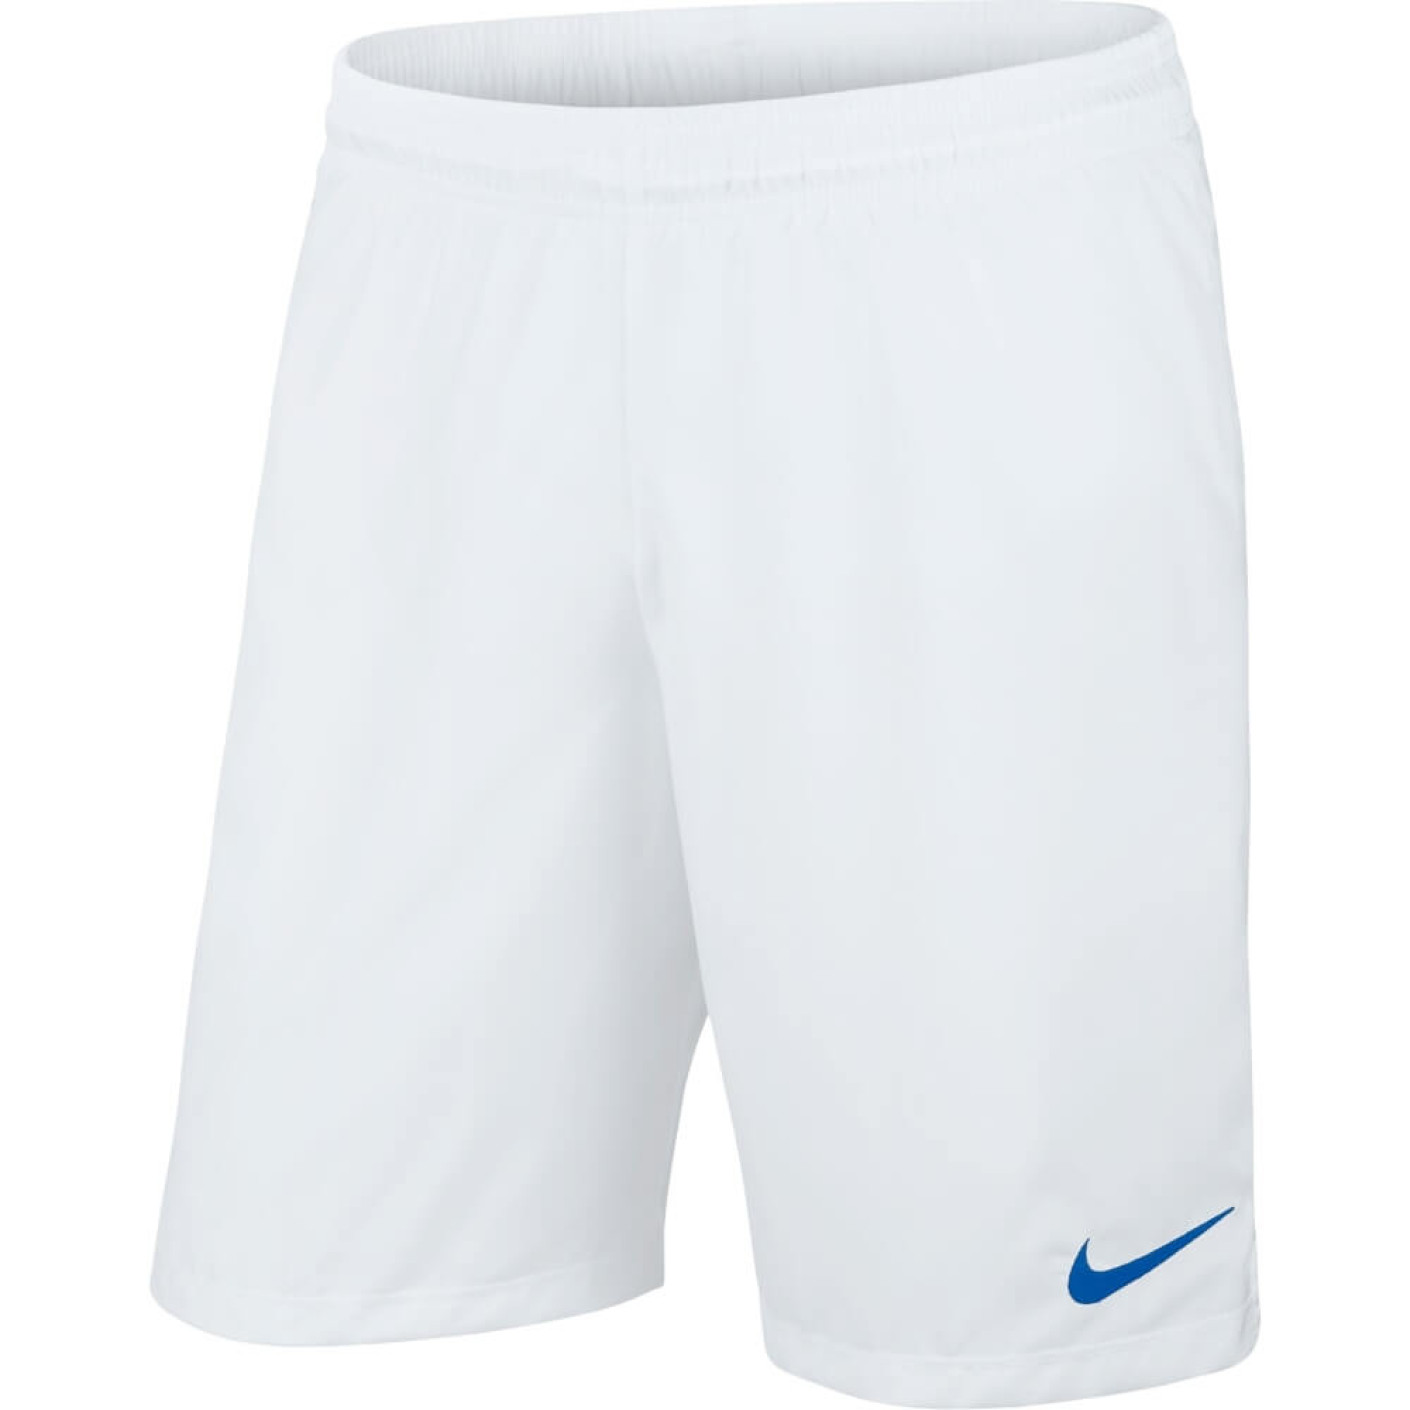 Nike Laser Woven III Short NB White Royal Blue